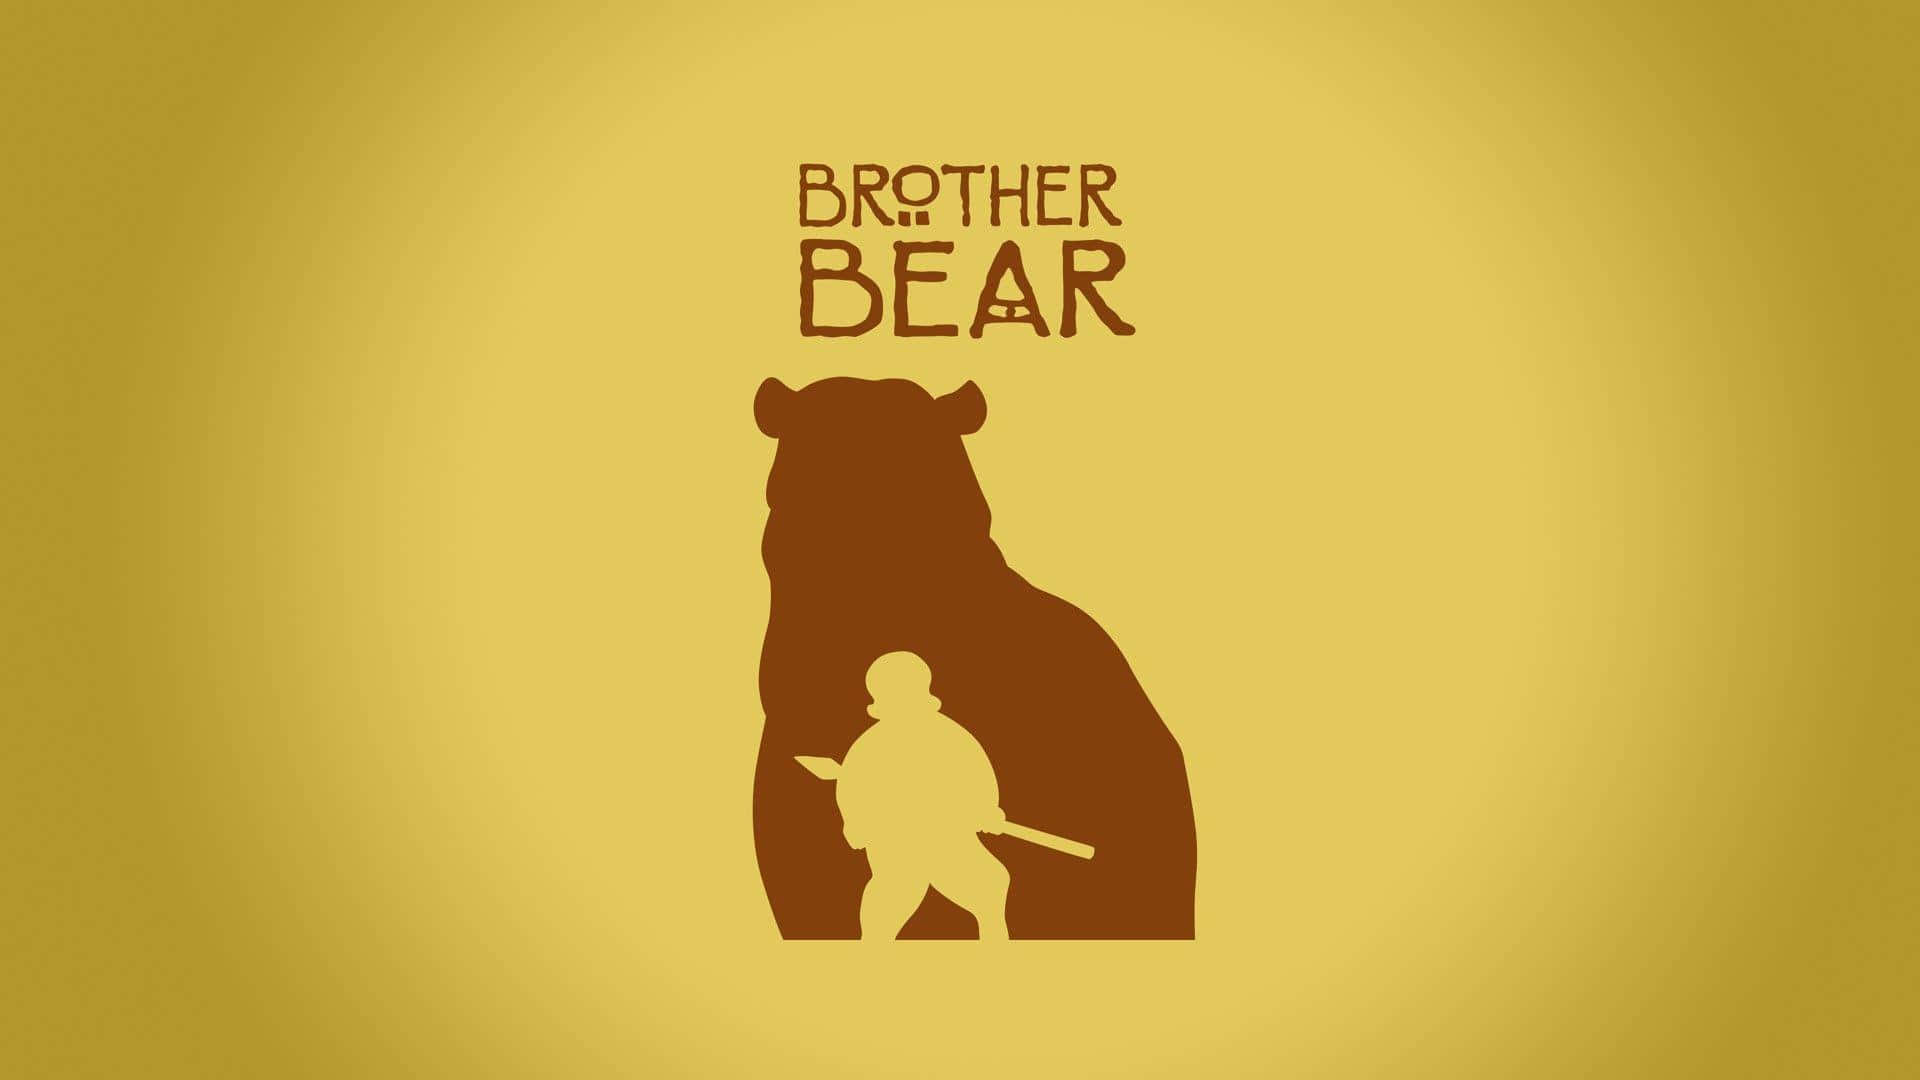 the brotherly bond between Kenai and Koda in Disney's hit movie Brother Bear